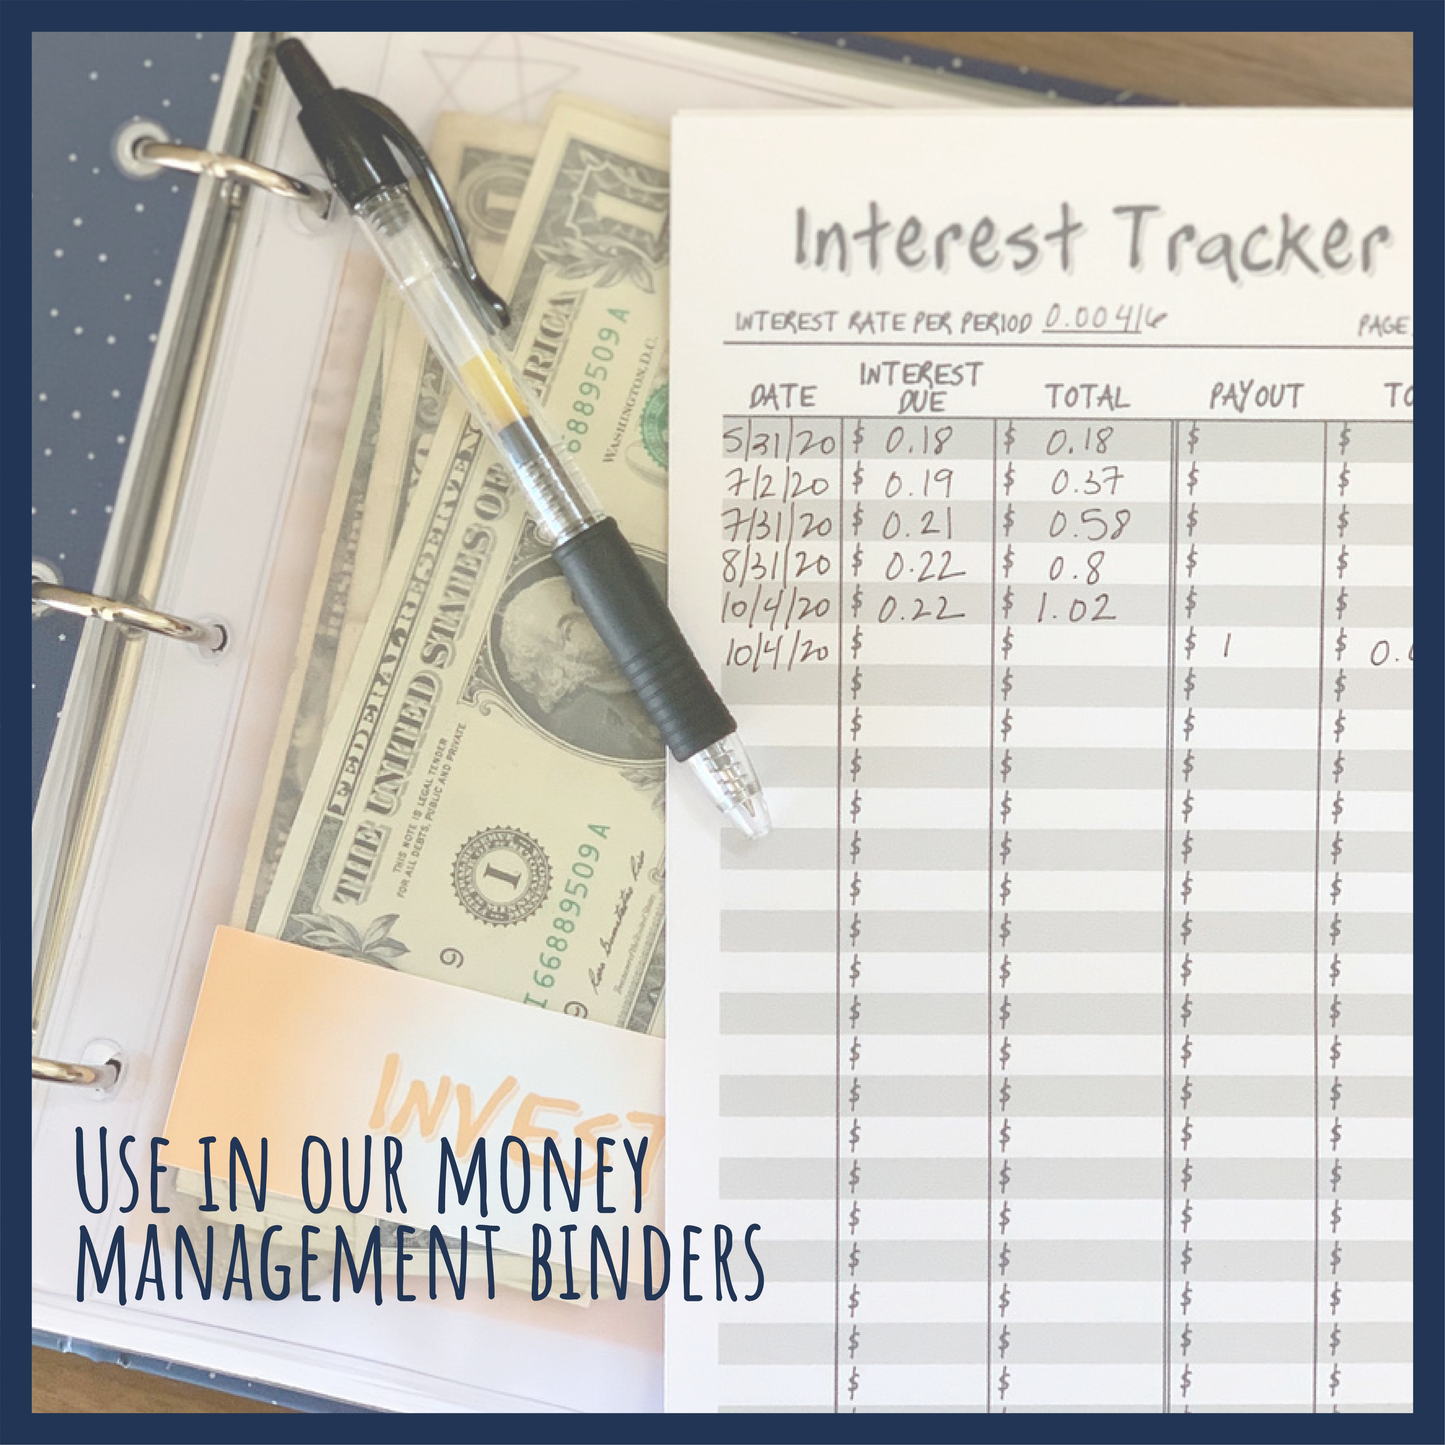 Interest Tracker & Cheat Sheet Printable